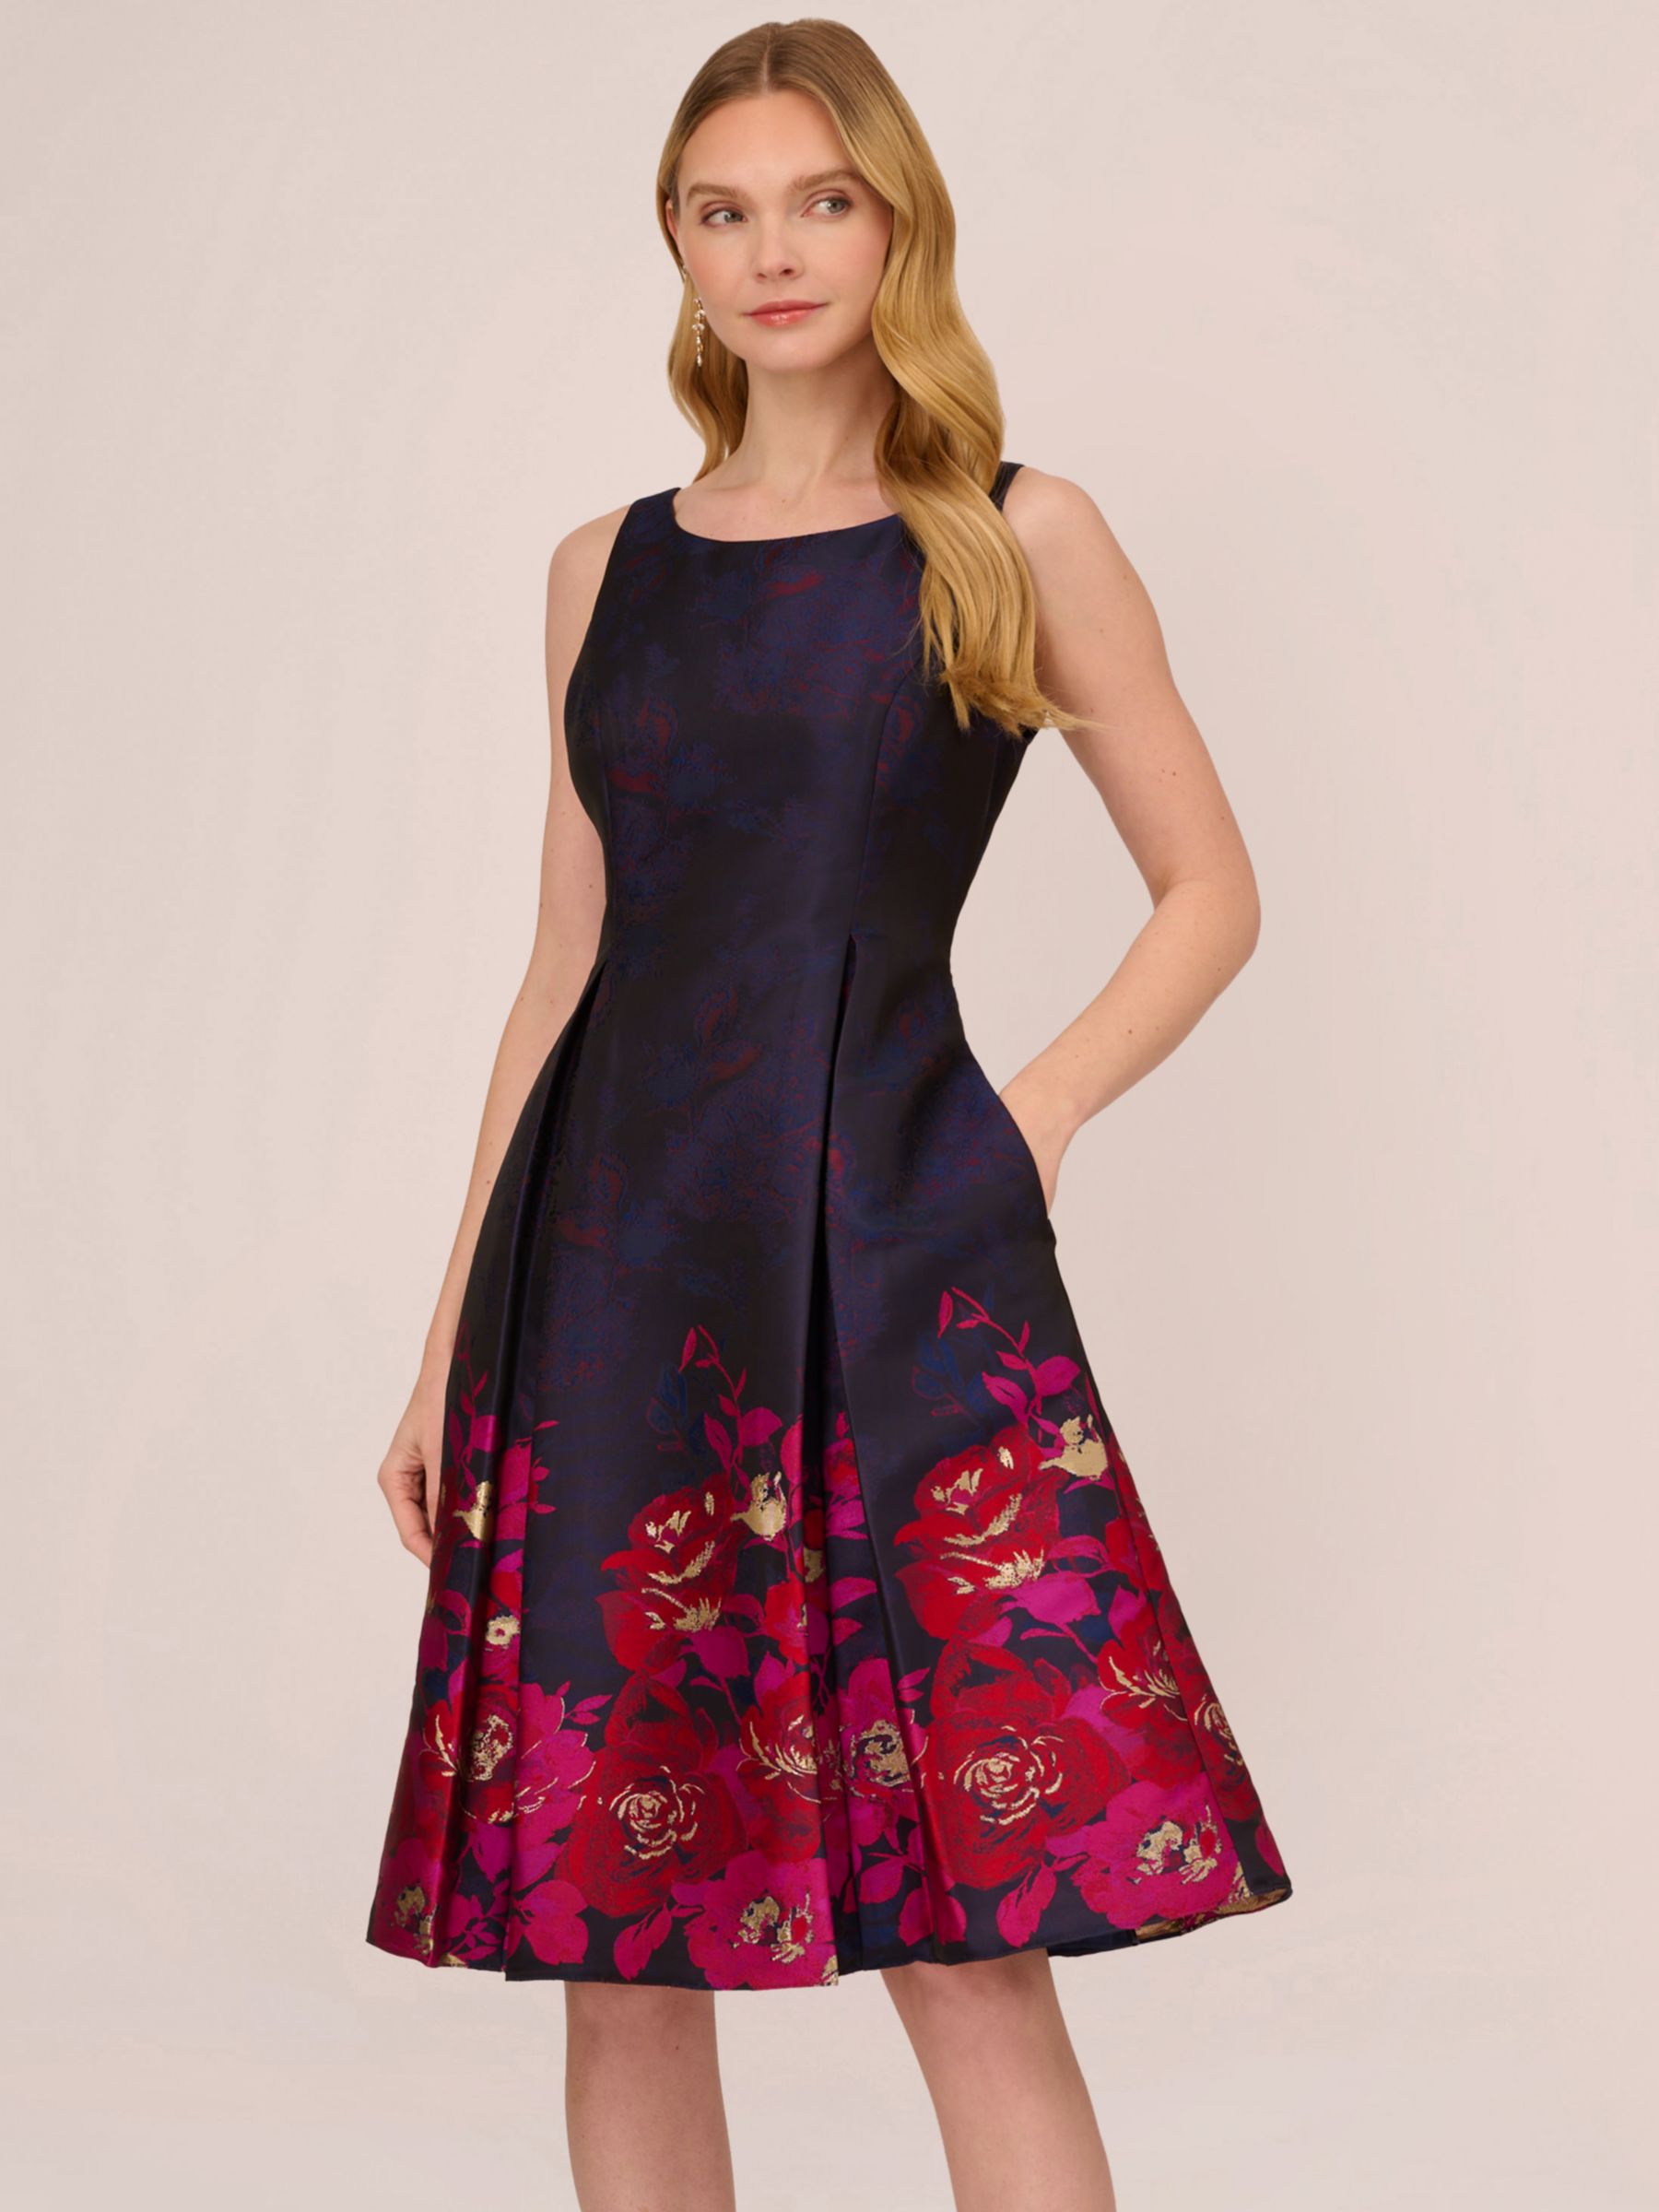 Adrianna Papell Floral Border Jacquard Dress, Navy/Pink Multi, 6